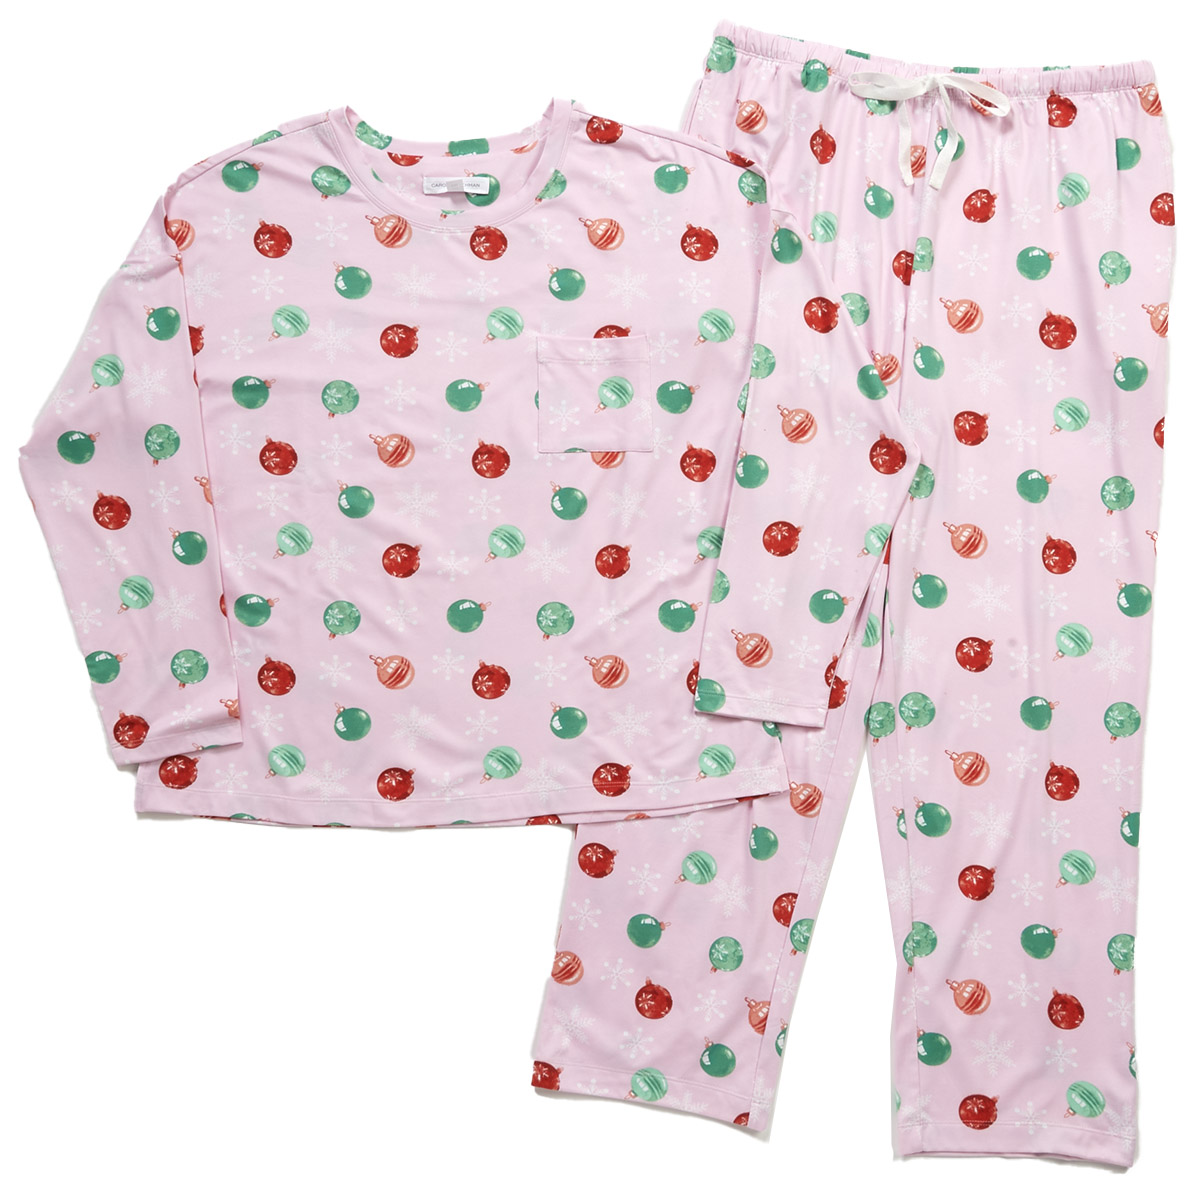 Petite Carole Hochman Long Sleeve Ornaments Pajama Set